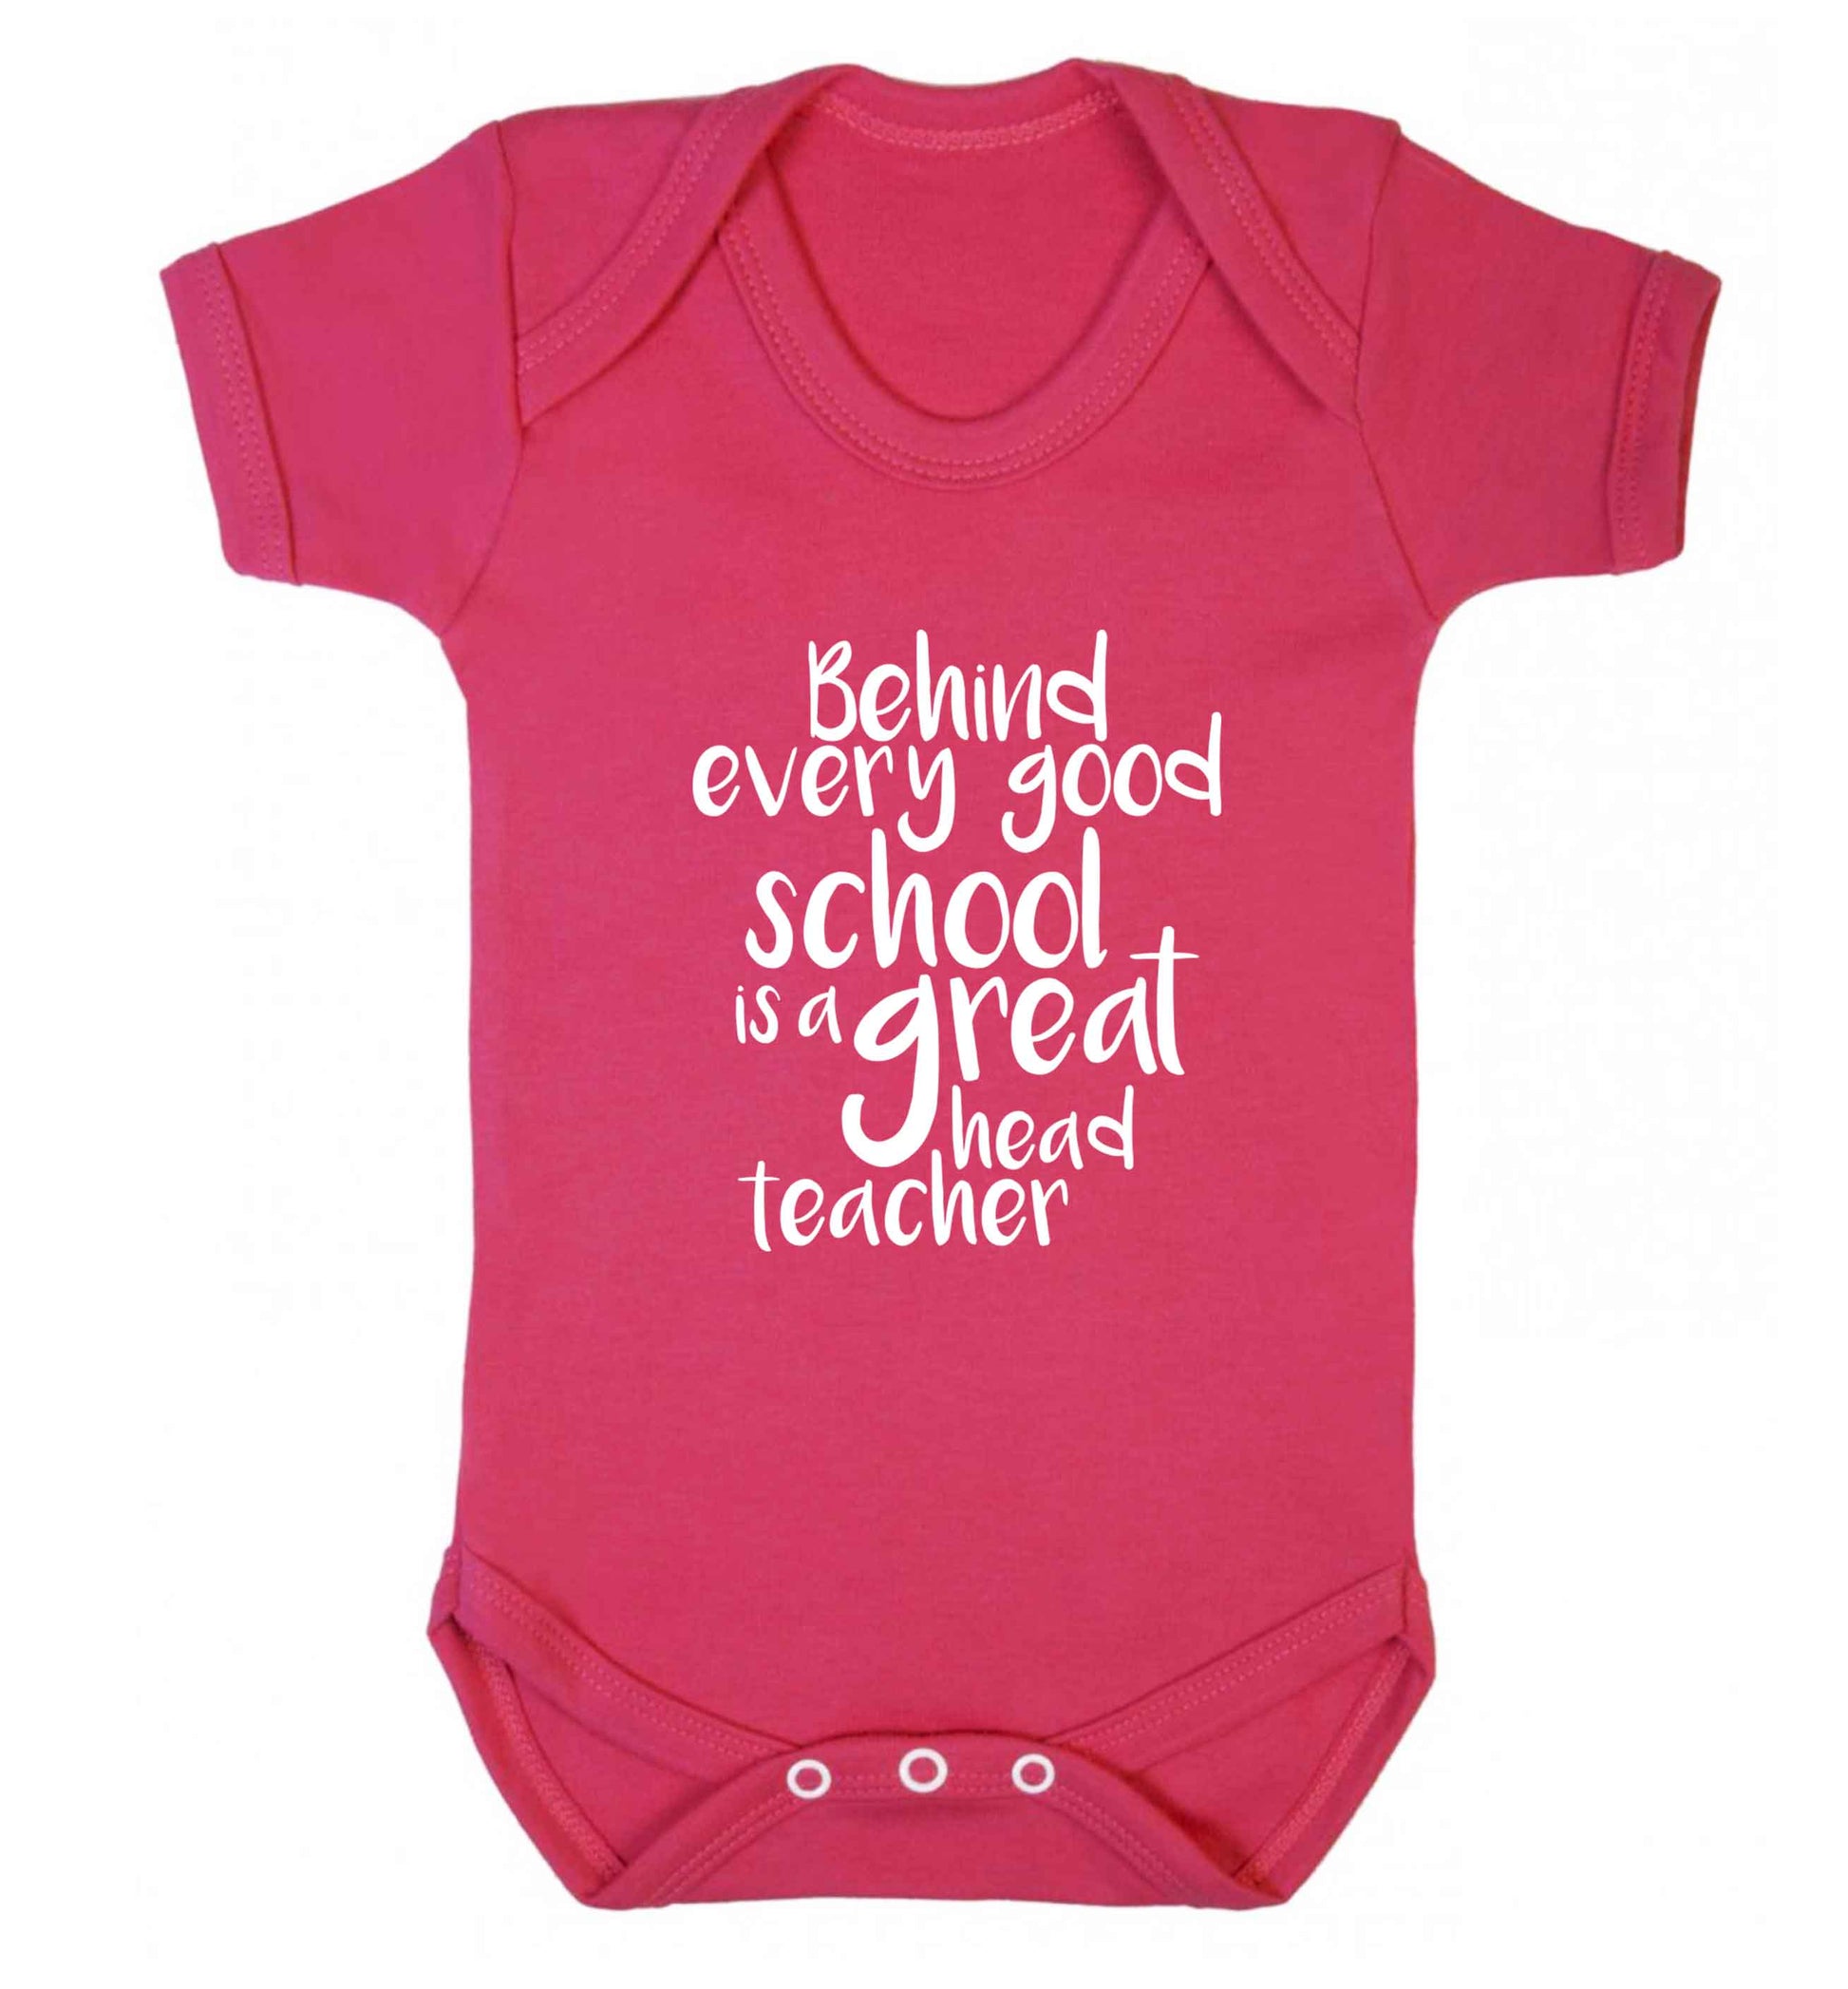 Behind every good school is a great head teacher baby vest dark pink 18-24 months